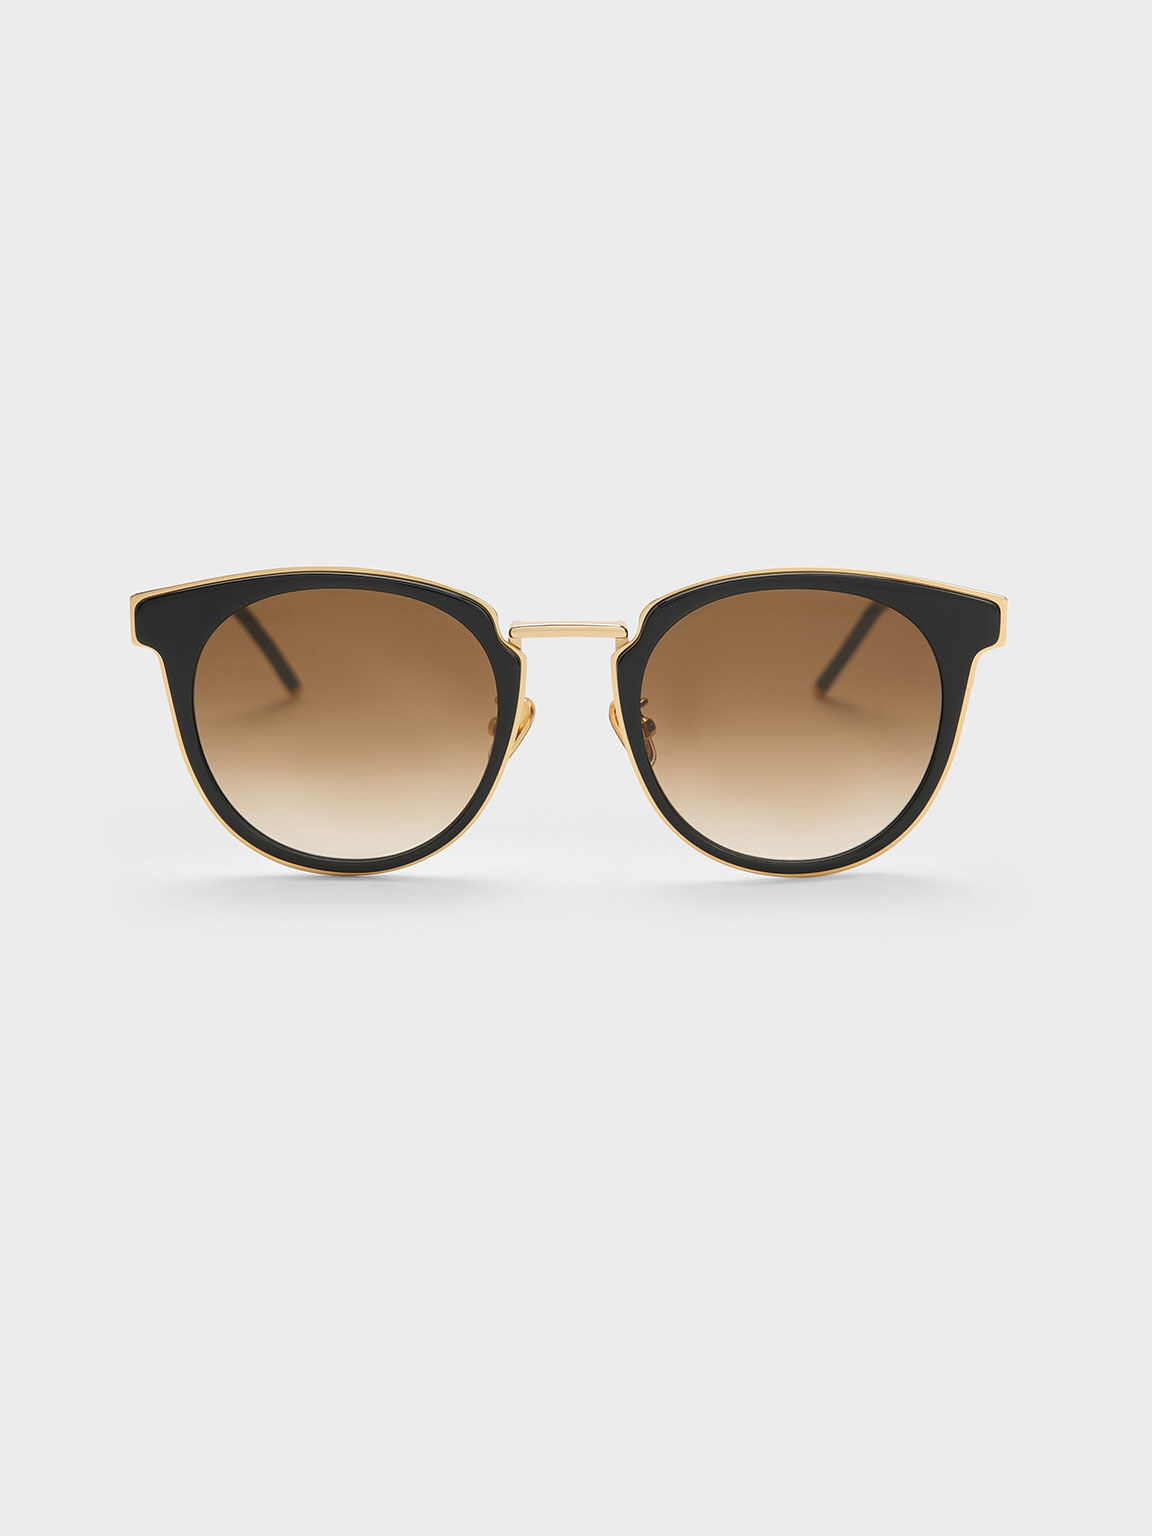 Tom Ford Amarra Sunglasses|uv400 Acetate Sunglasses For Men - Hip-hop Round  Frame, Tom Ford Style